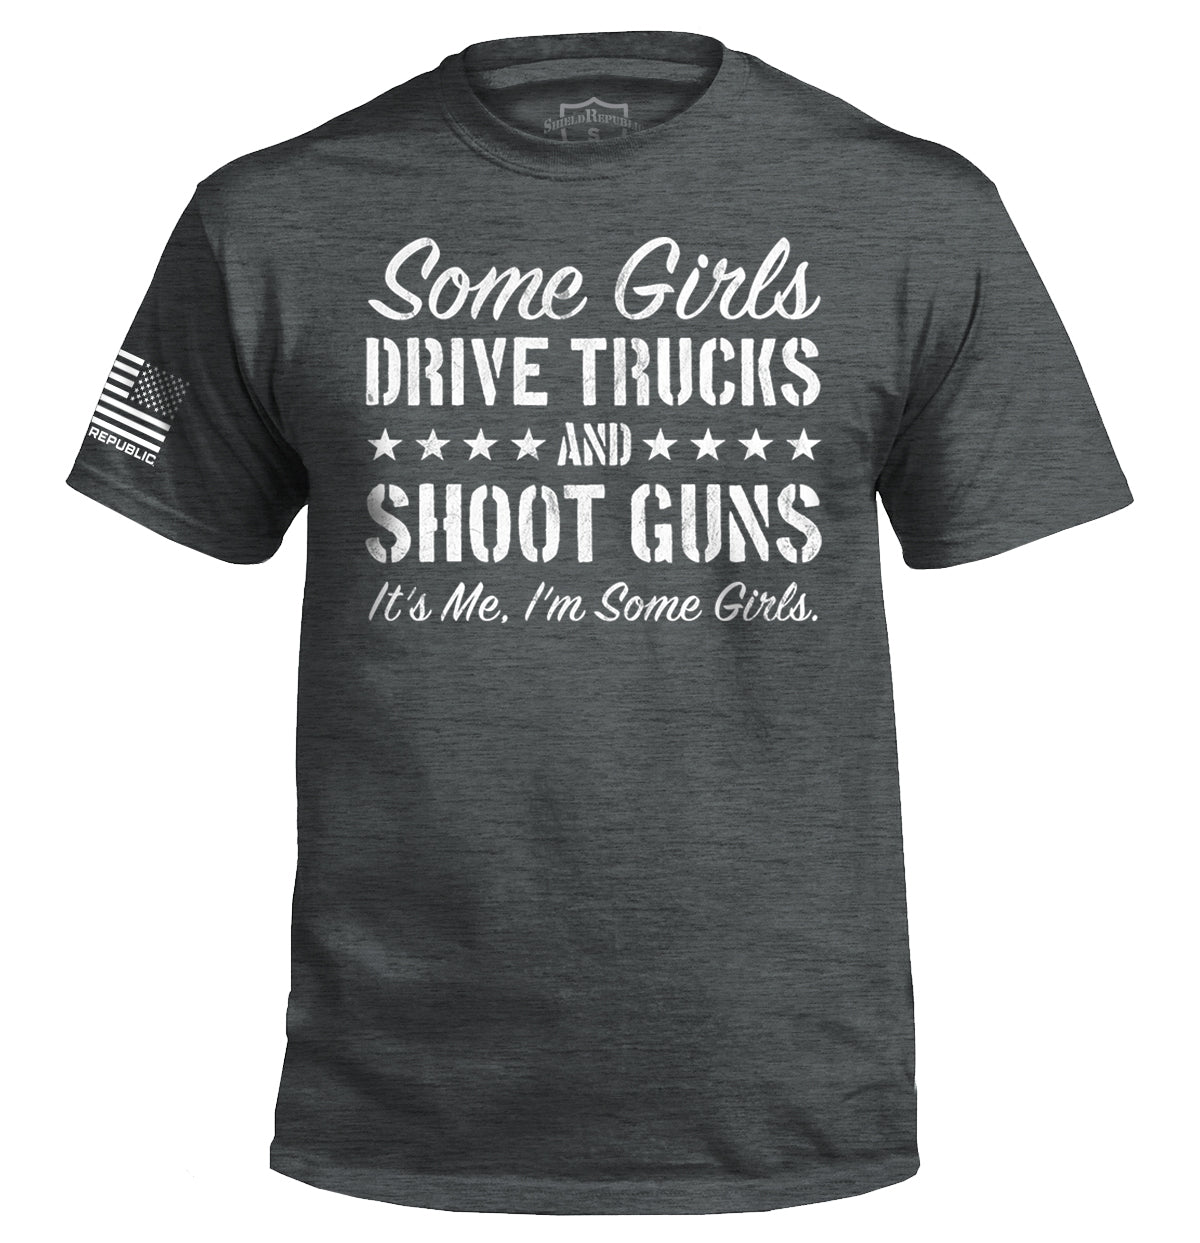 Some Girls Drive Trucks and Shoot Guns Tee